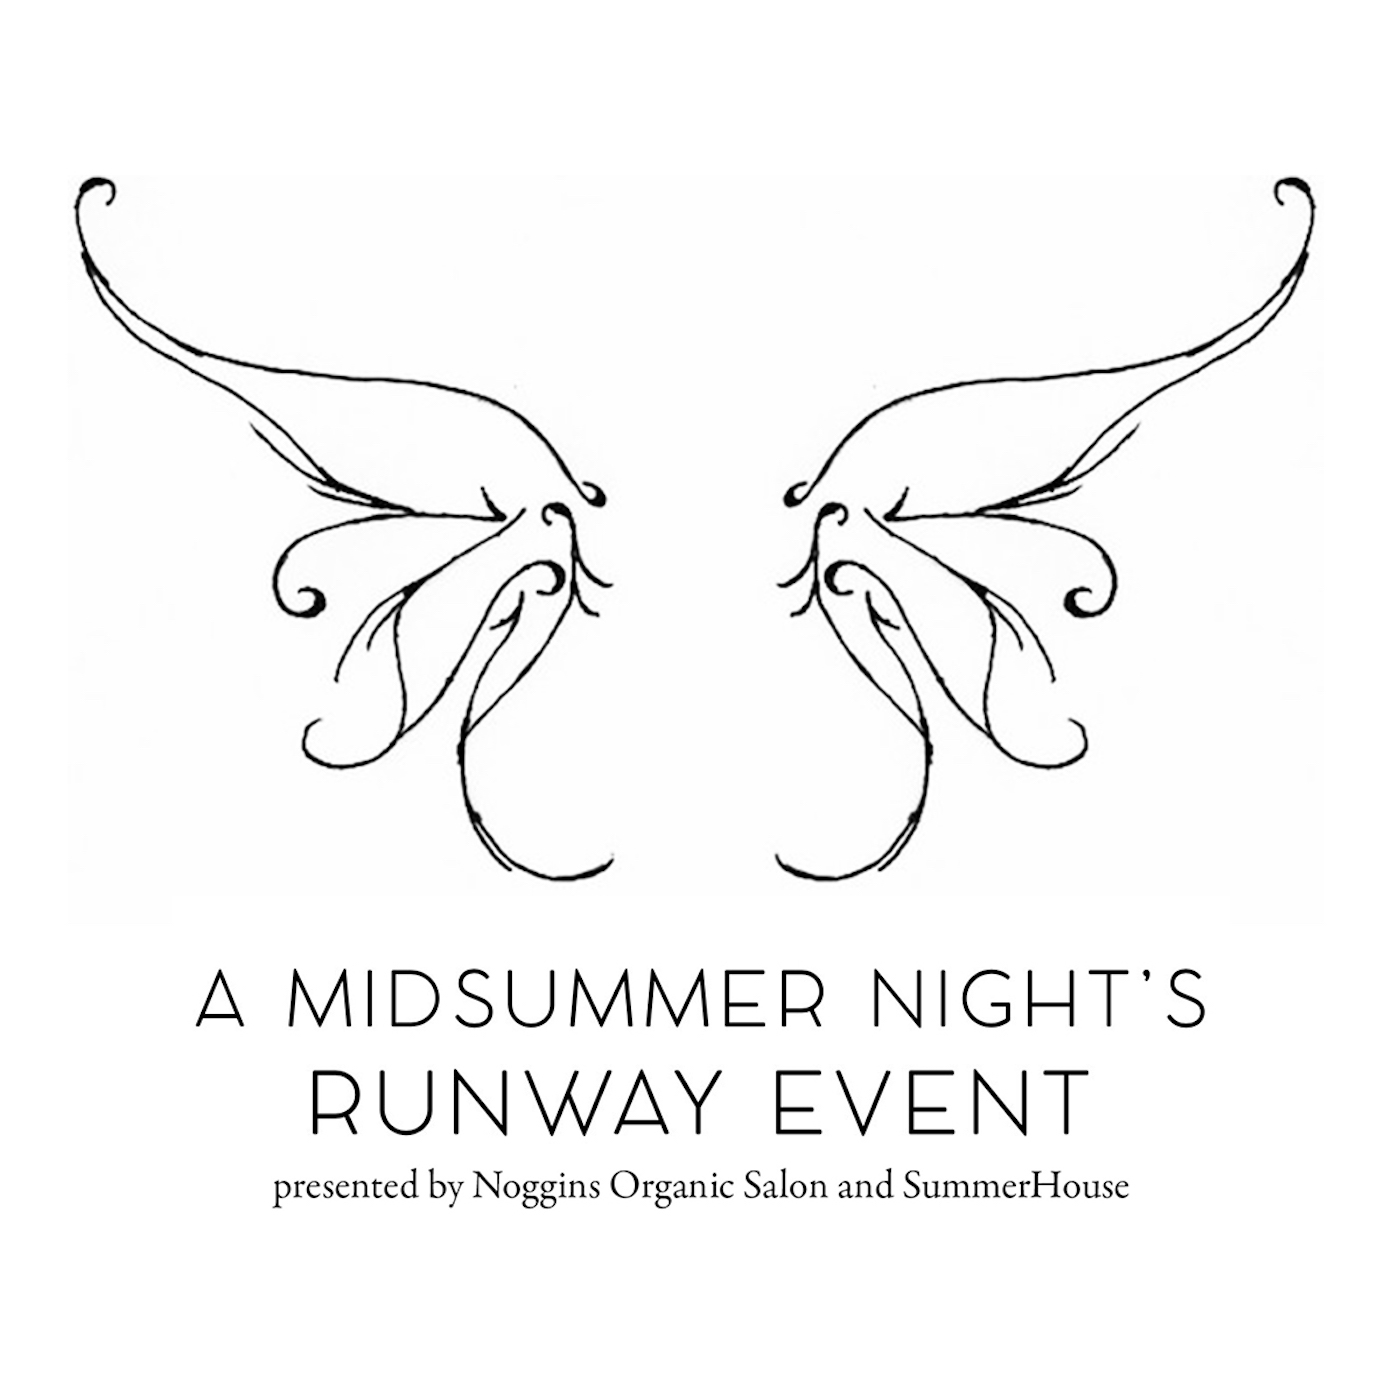 A Midsummer Night's Runway Event at SummerHouse // www.thehiveblog.com